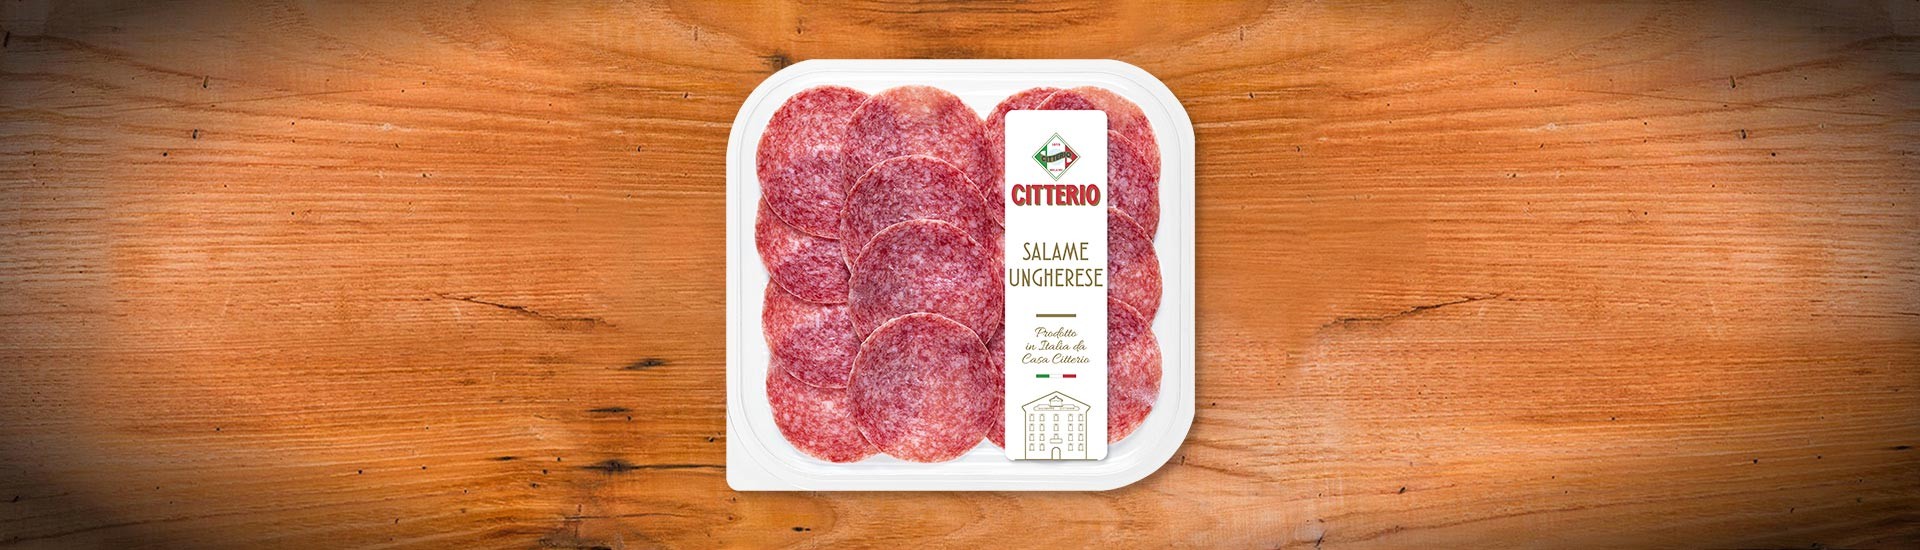 citterio-cover-altagastronoma-prodotto-salame-ungherese.jpg